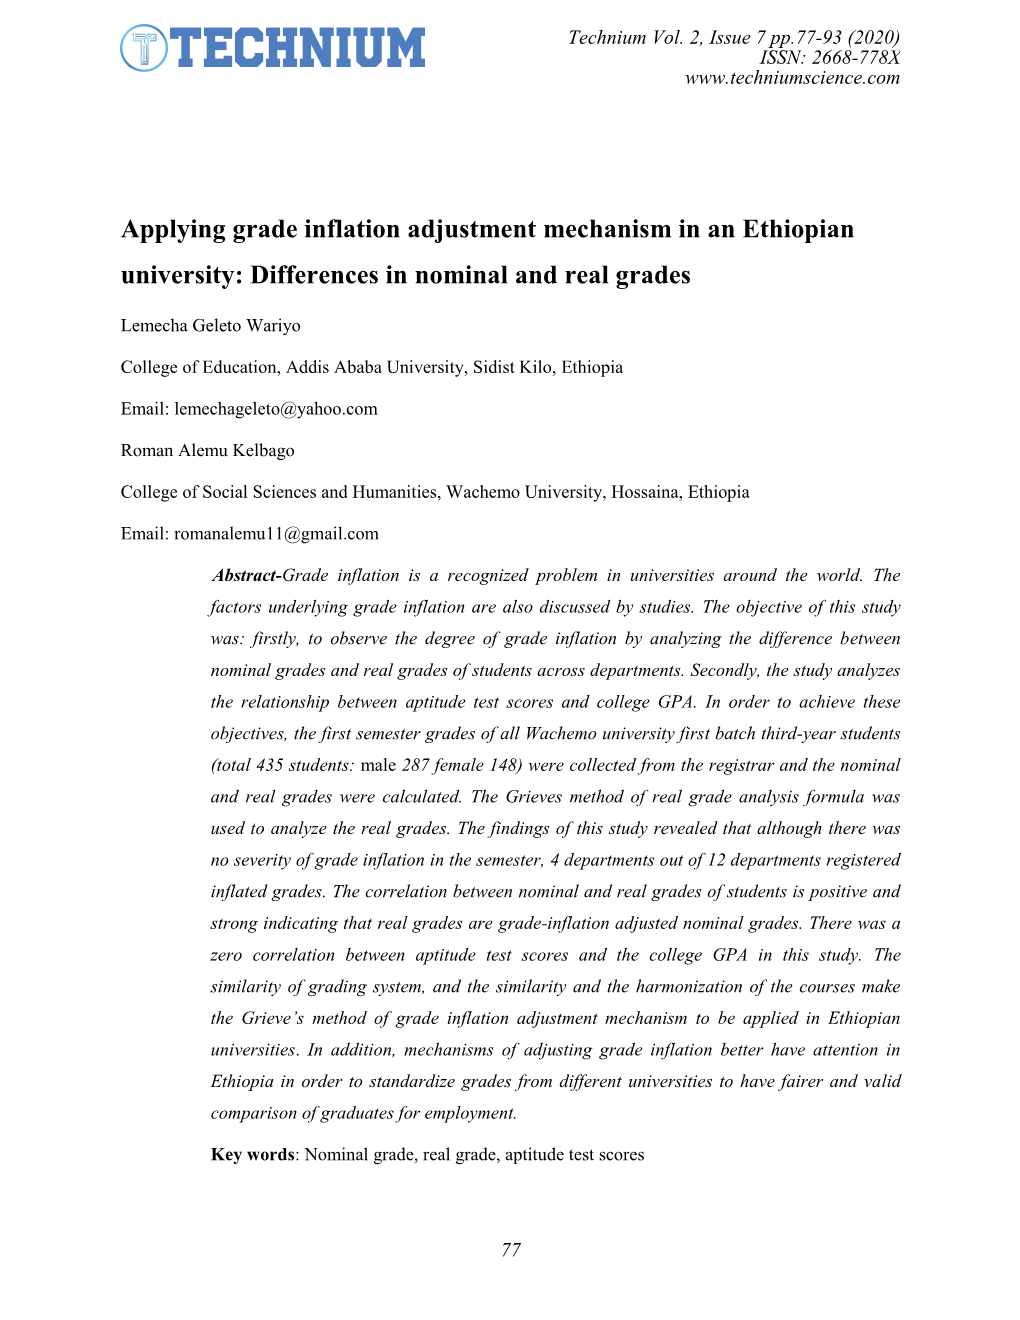 applying-grade-inflation-adjustment-mechanism-in-an-ethiopian